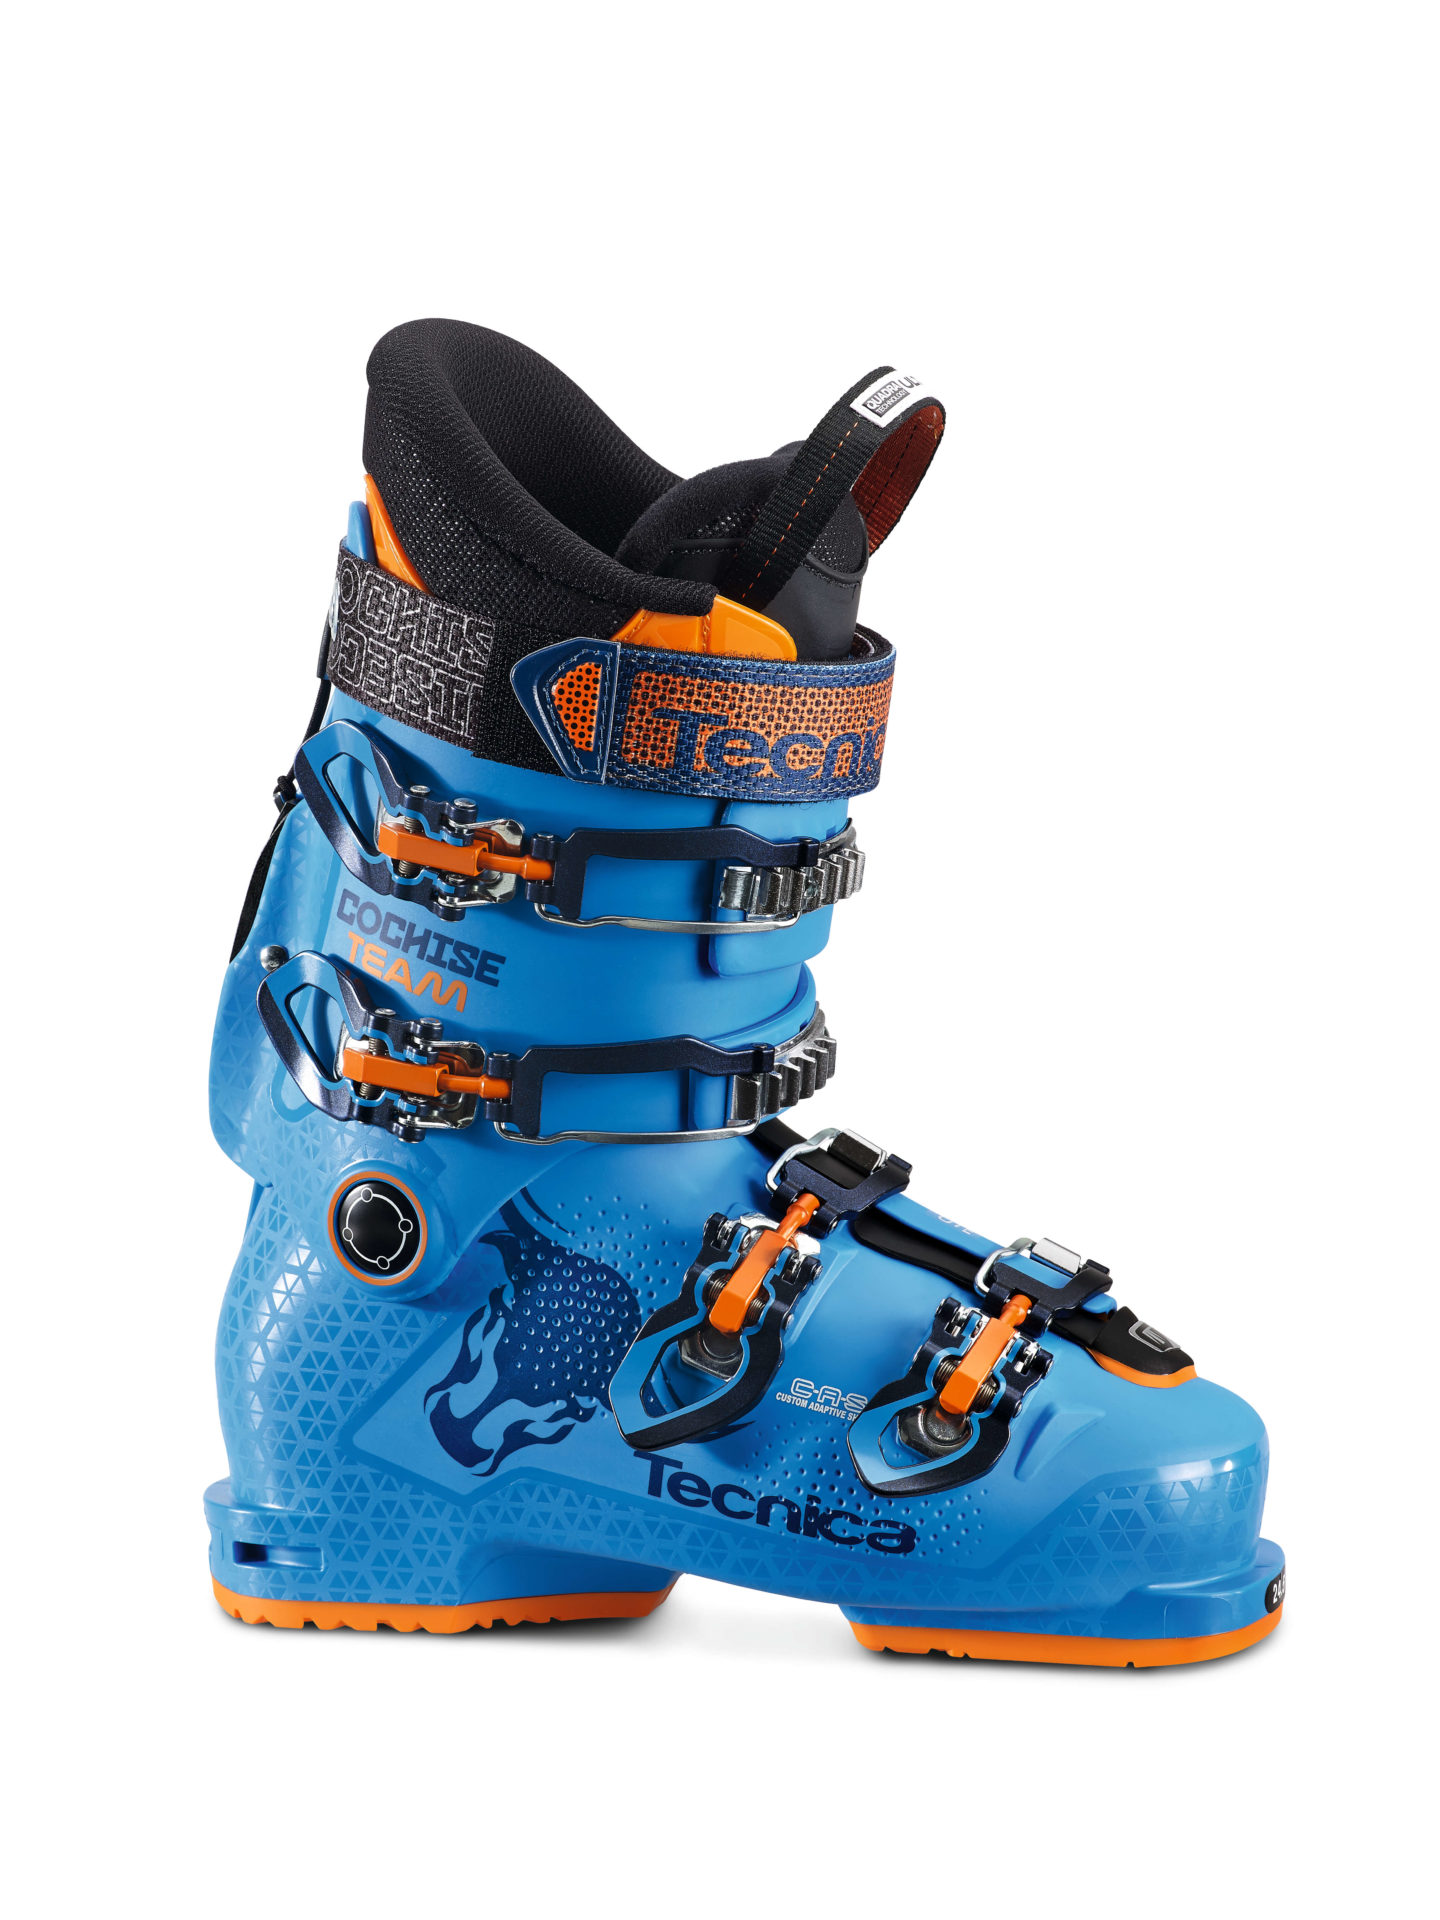 Tecnica Cochise Team Jr Ski Boots 2018 - Northern Ski Works